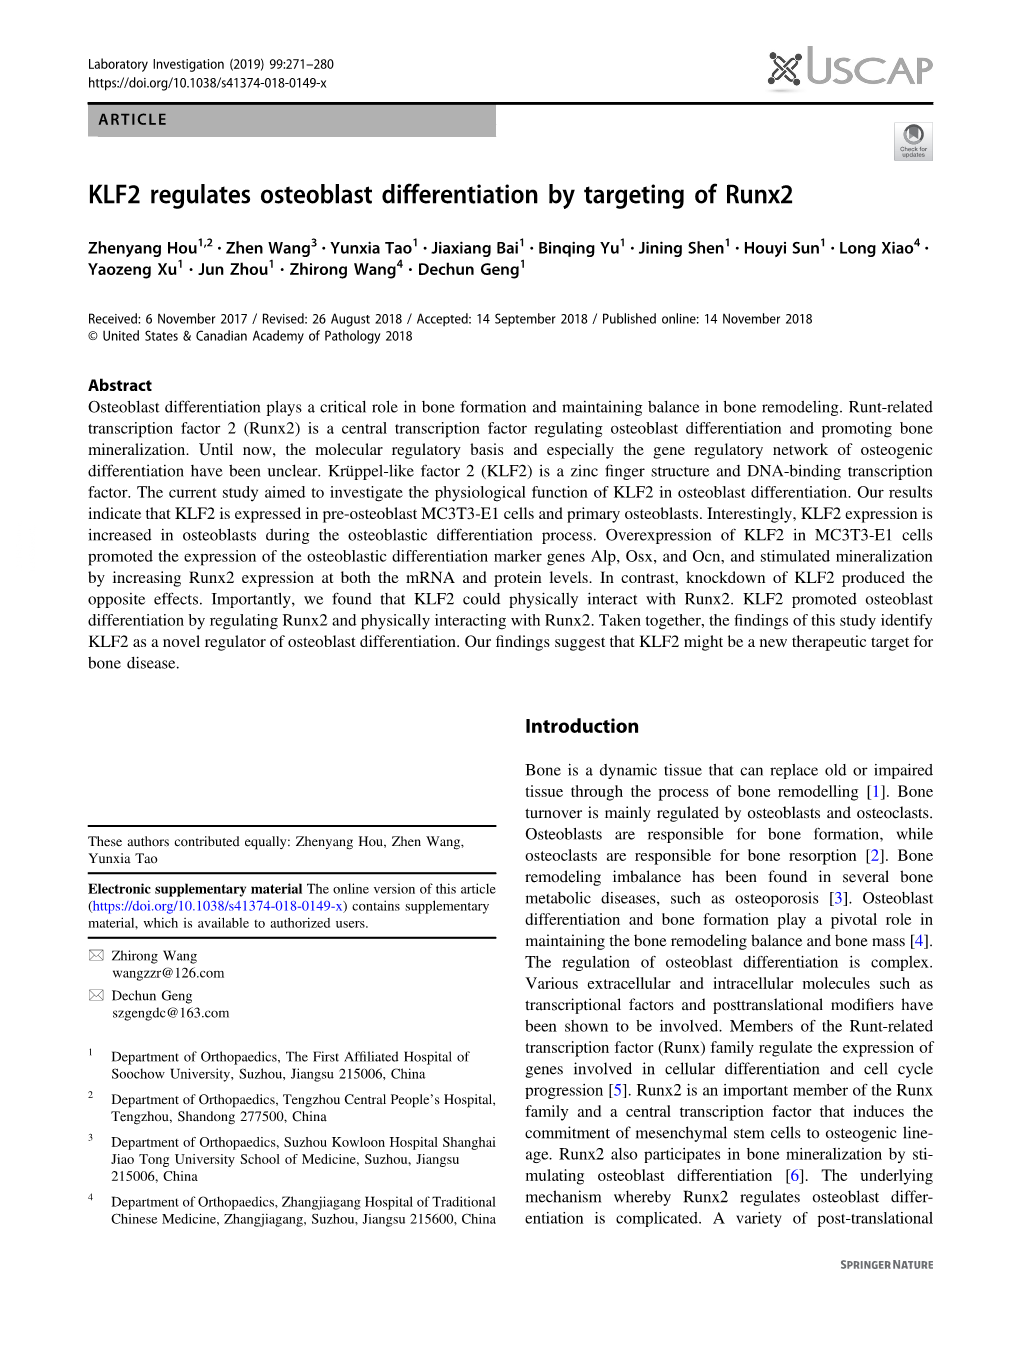 KLF2 Regulates Osteoblast Differentiation by Targeting of Runx2